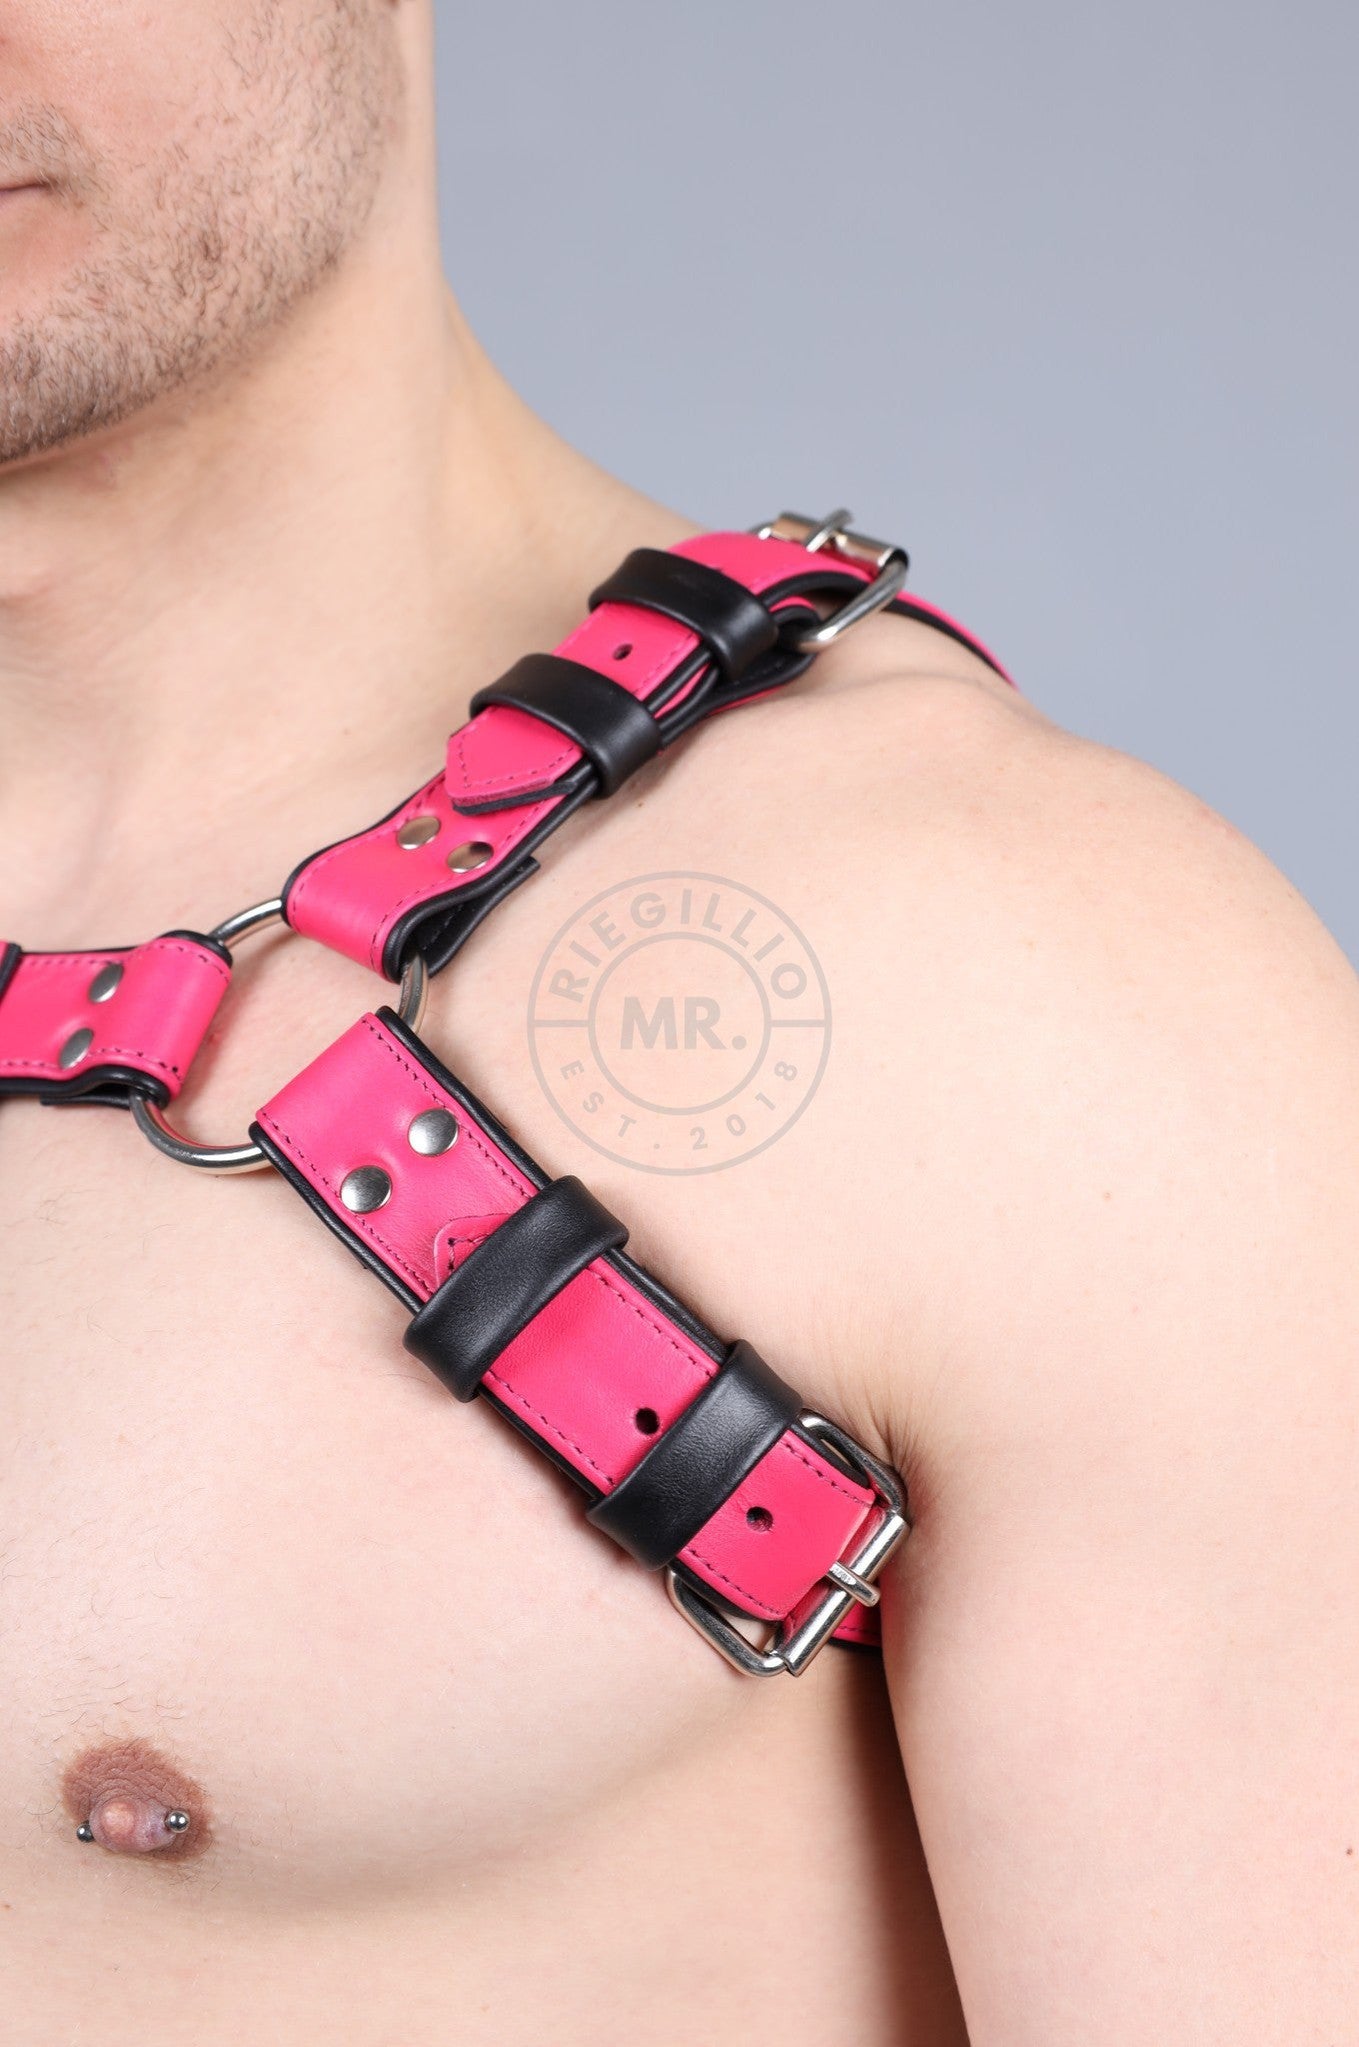 Leather Harness - Pink at MR. Riegillio